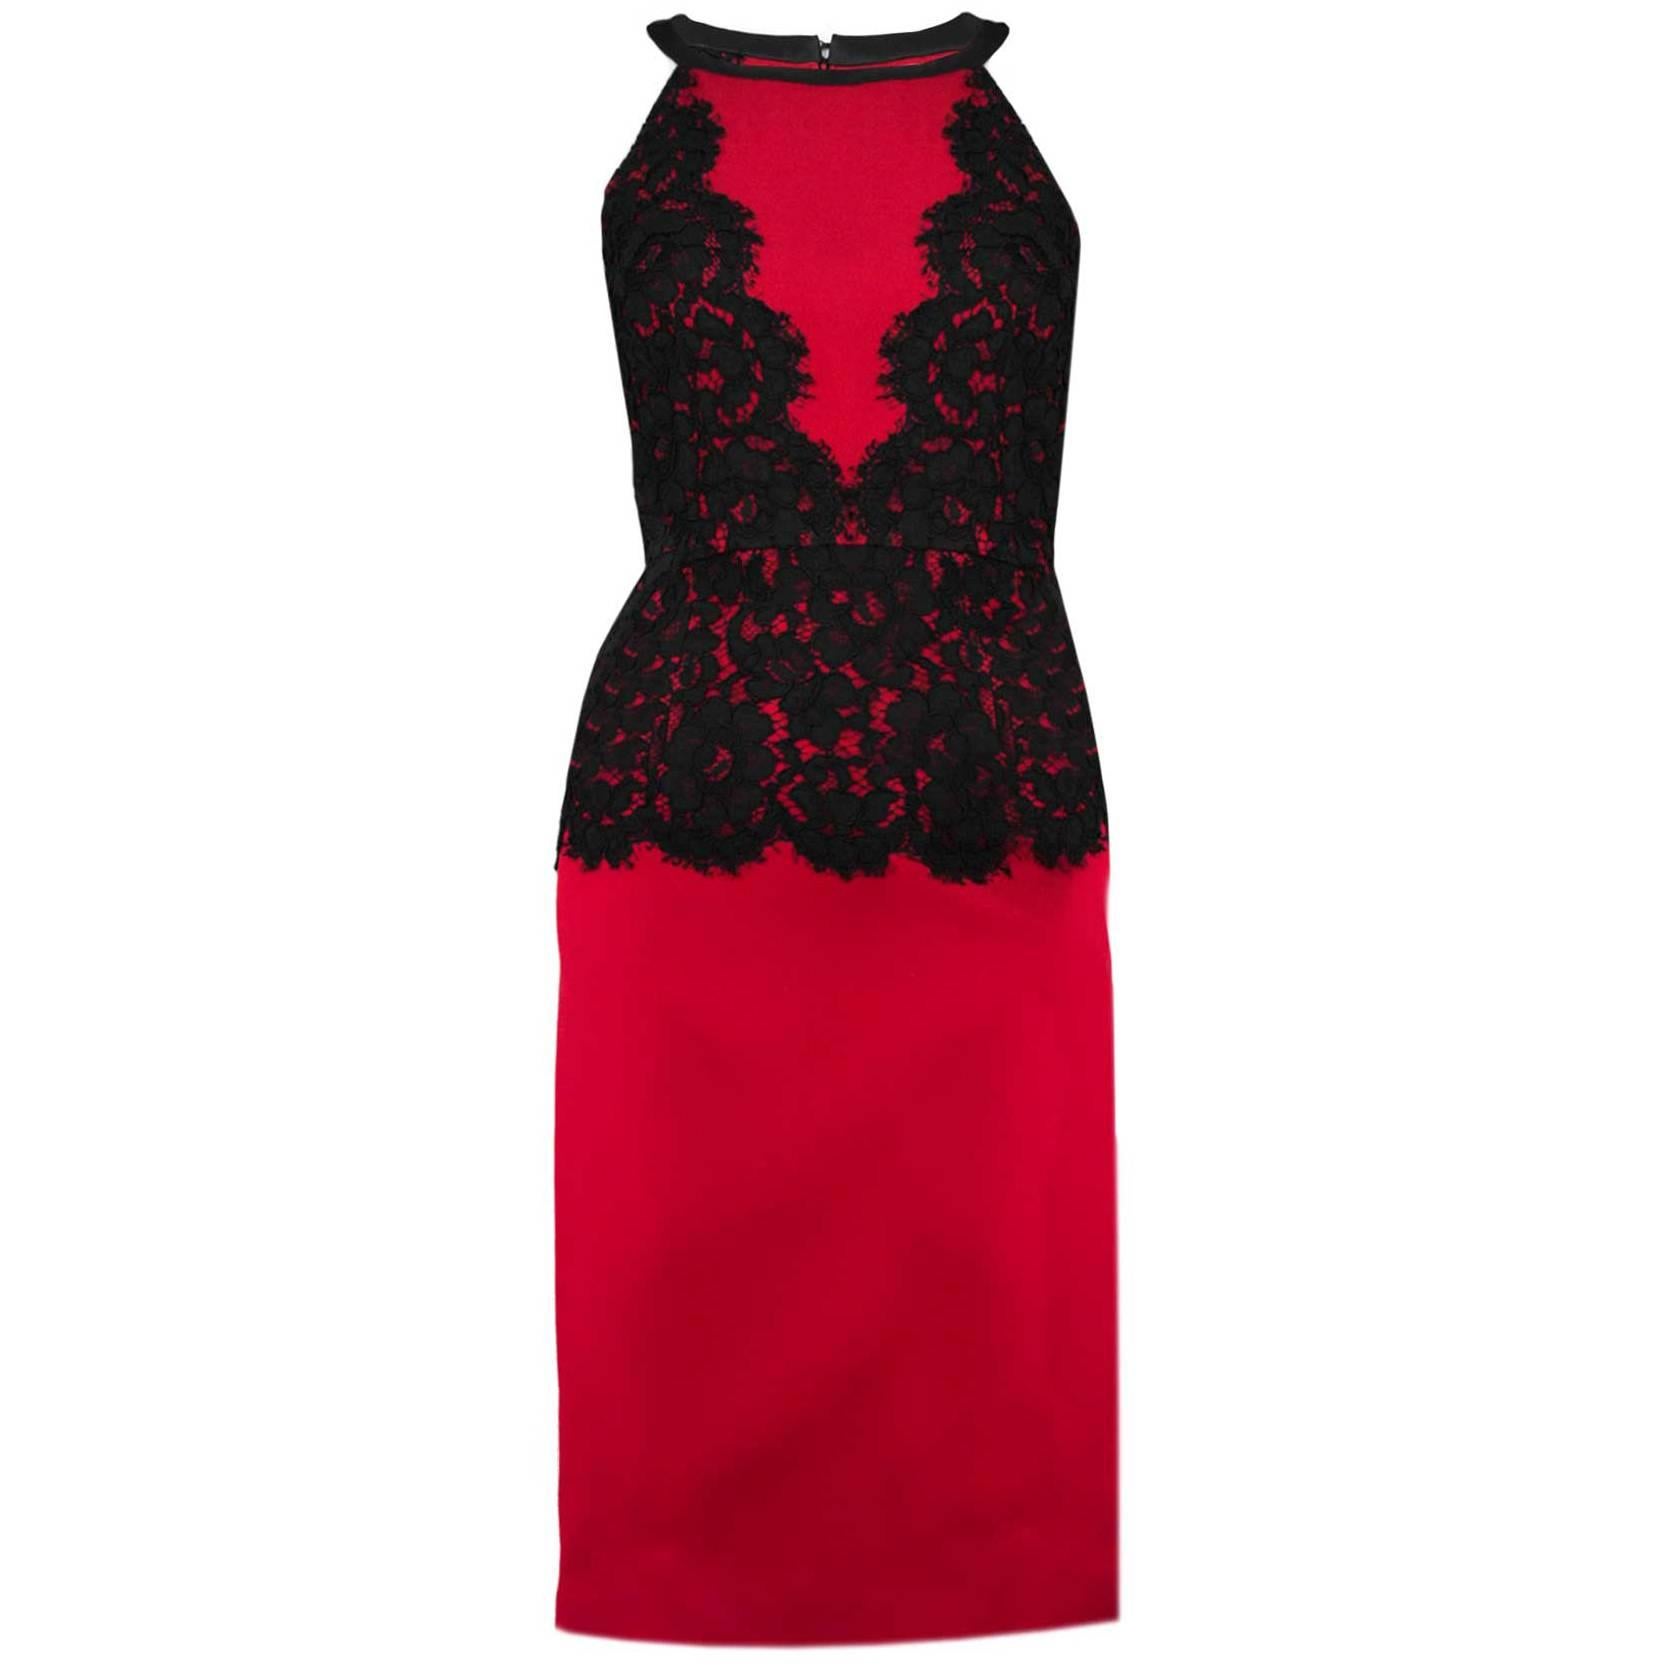 Michael Kors Collection Red & Black Lace Cocktail Dress sz US2